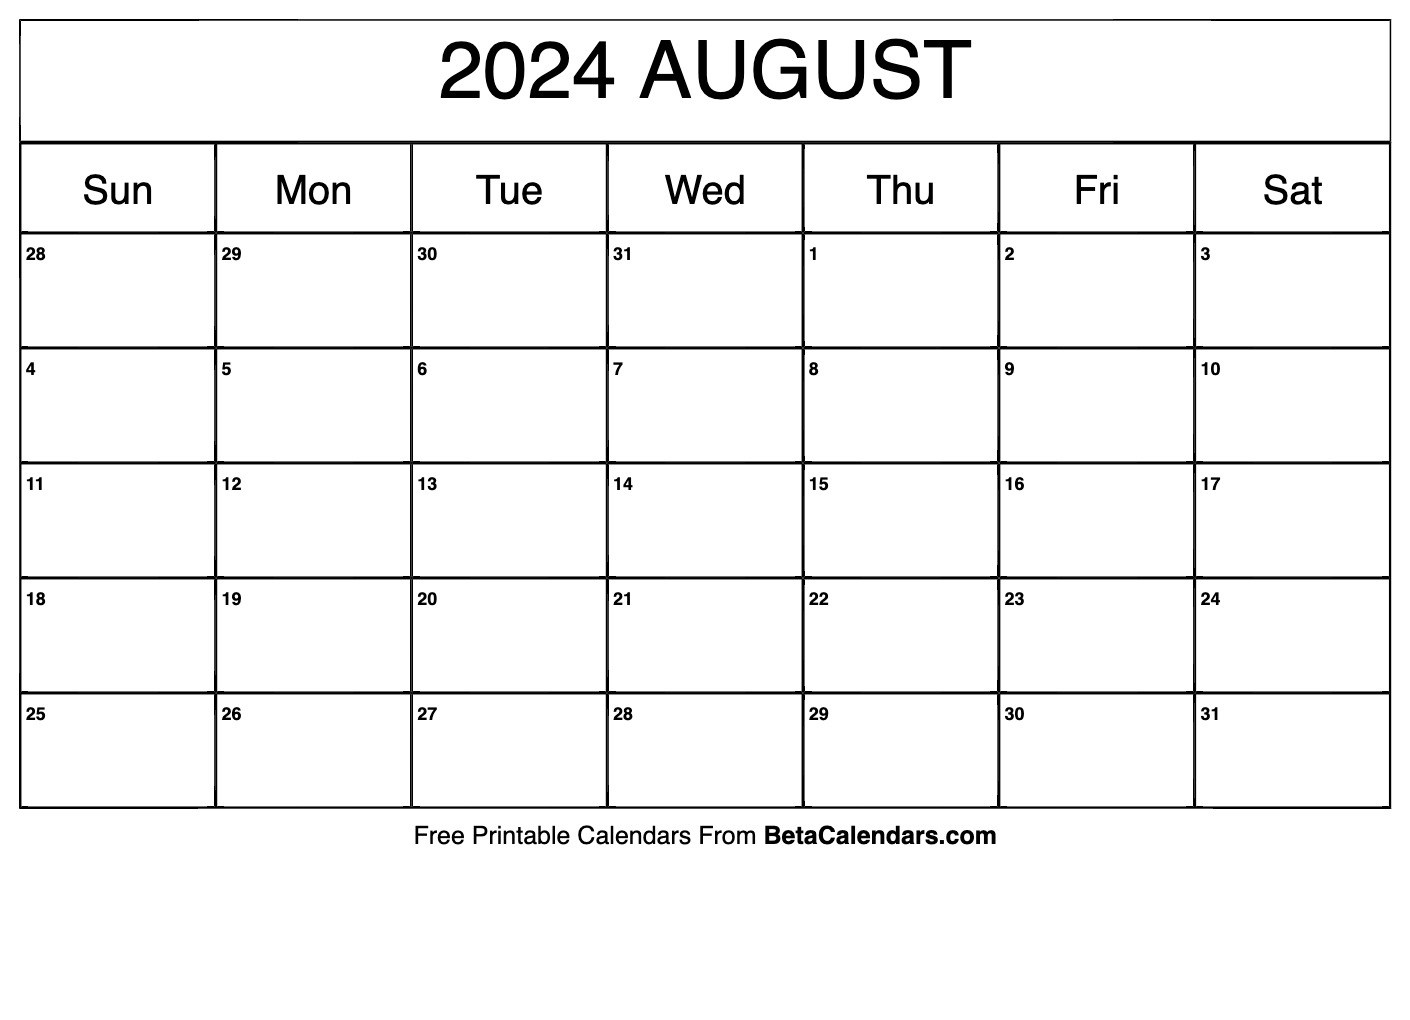 Free Printable August 2024 Calendar regarding Free Printable Calendar 2024 August